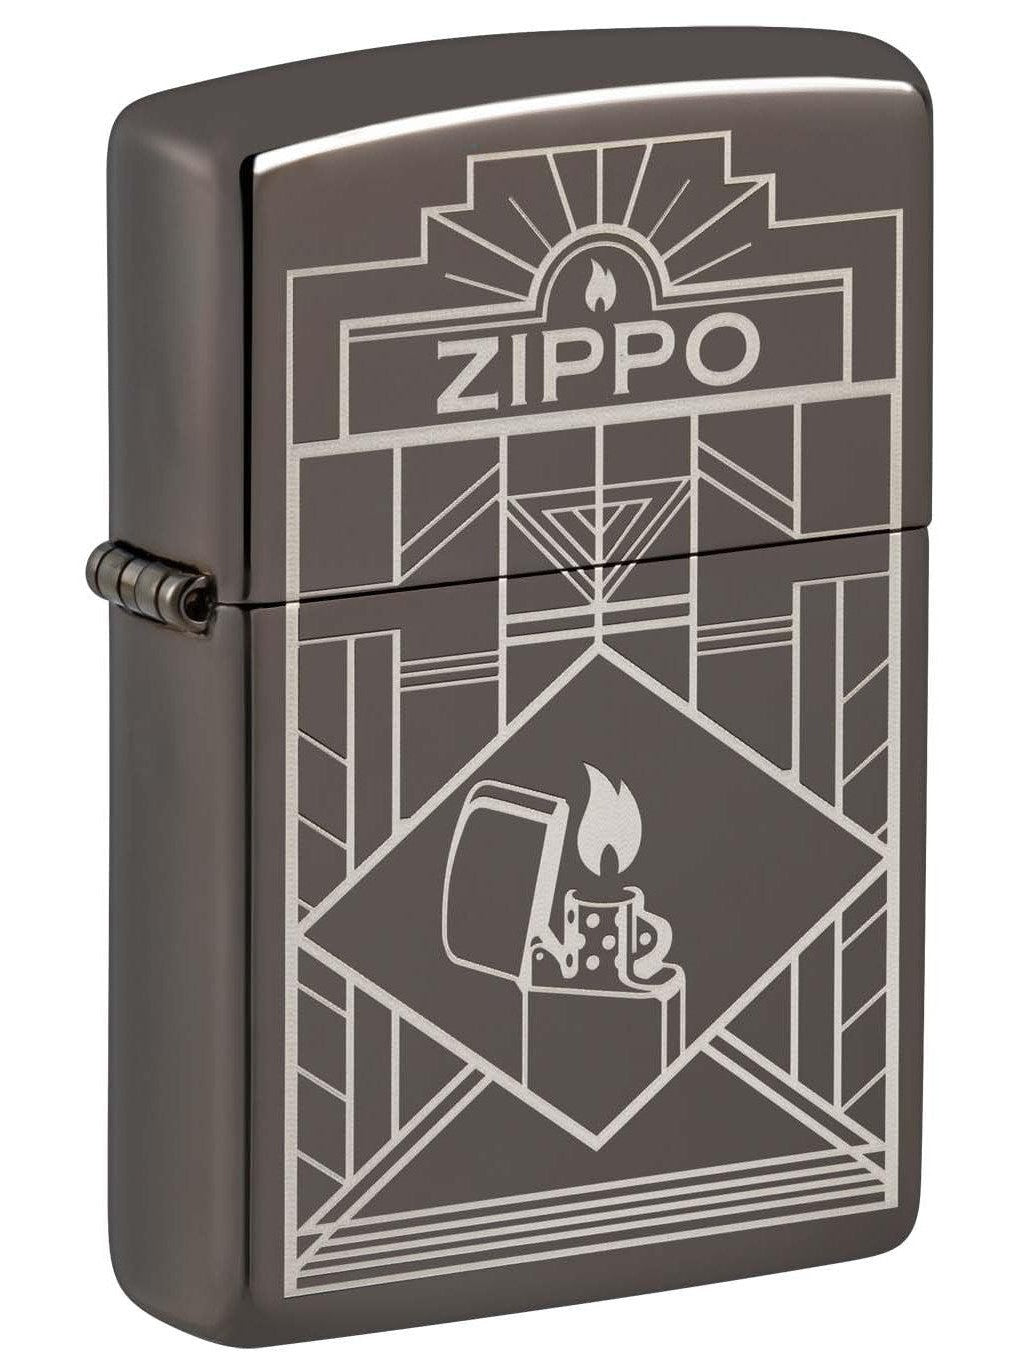 Zippo Lighter: Engraved Art Deco Zippo Design - Black Ice 48247